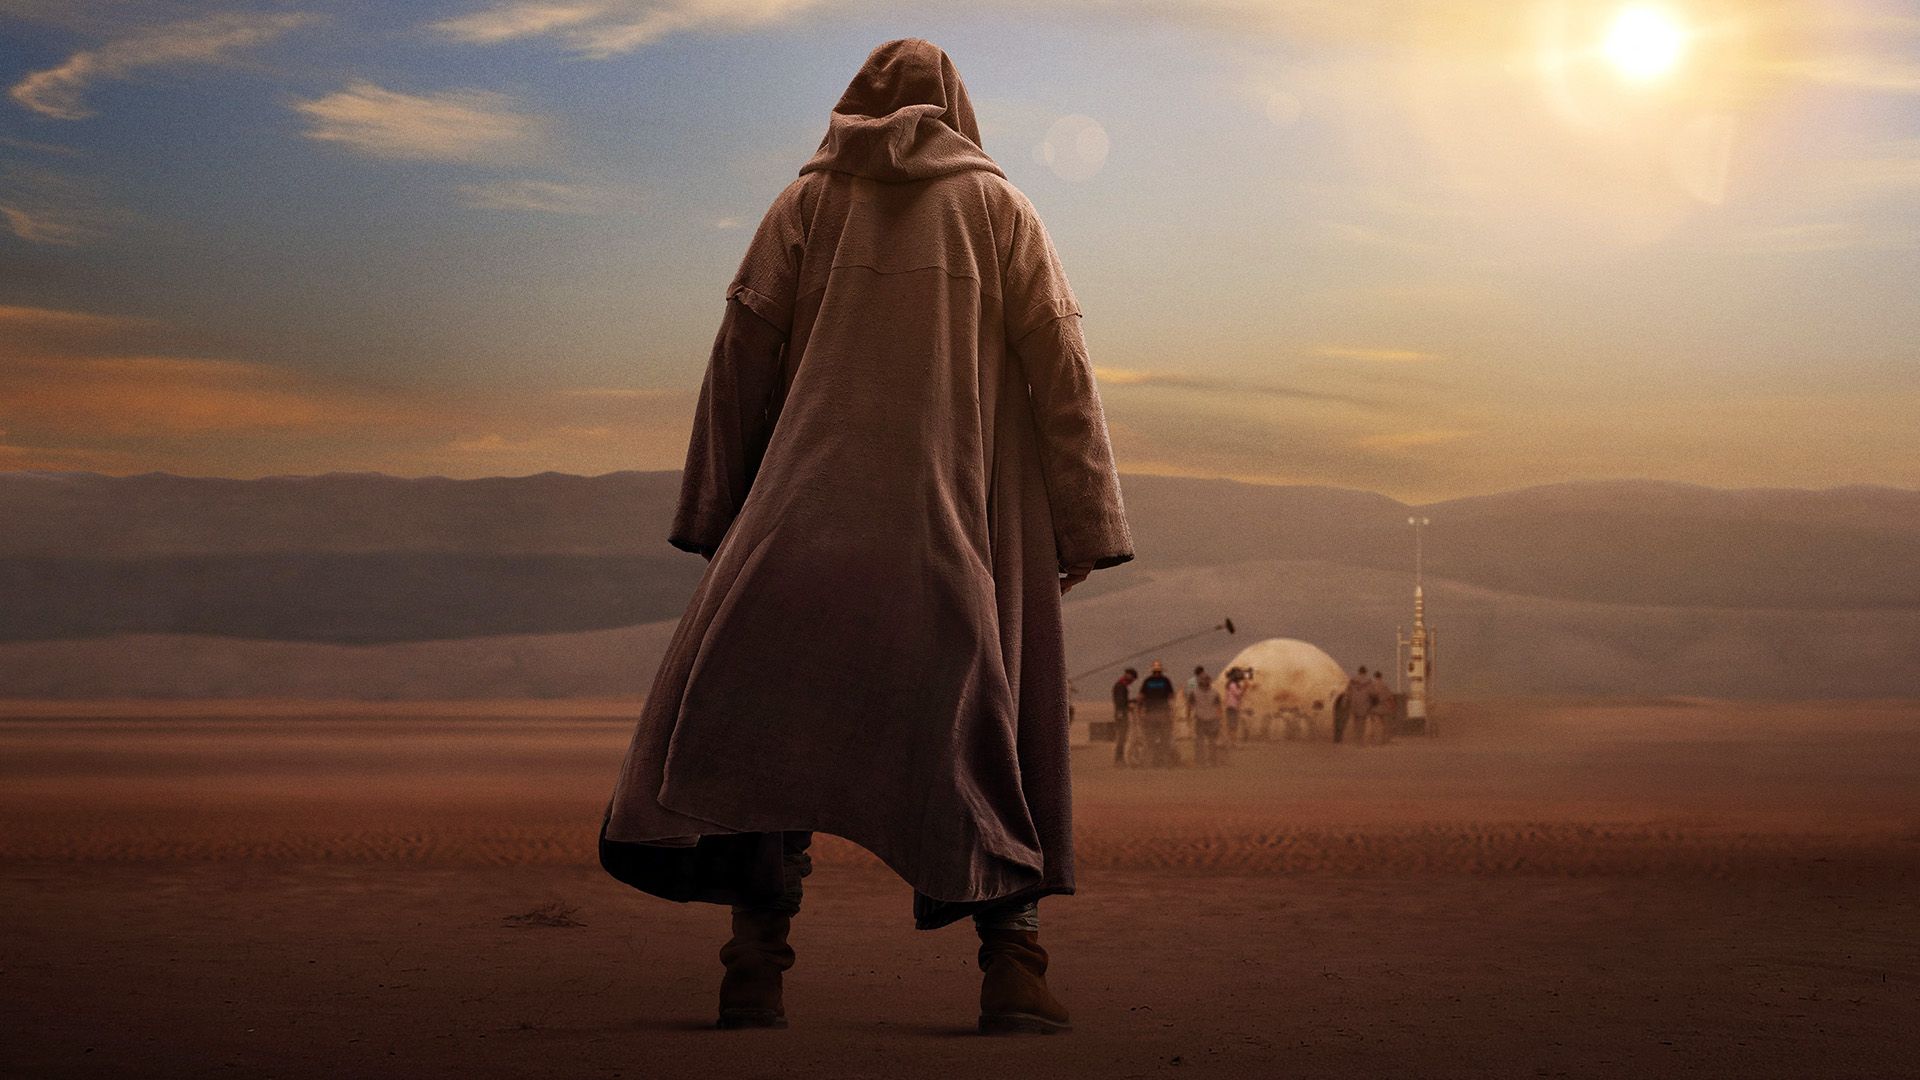 Obi-Wan Kenobi: A Jedi's Return background